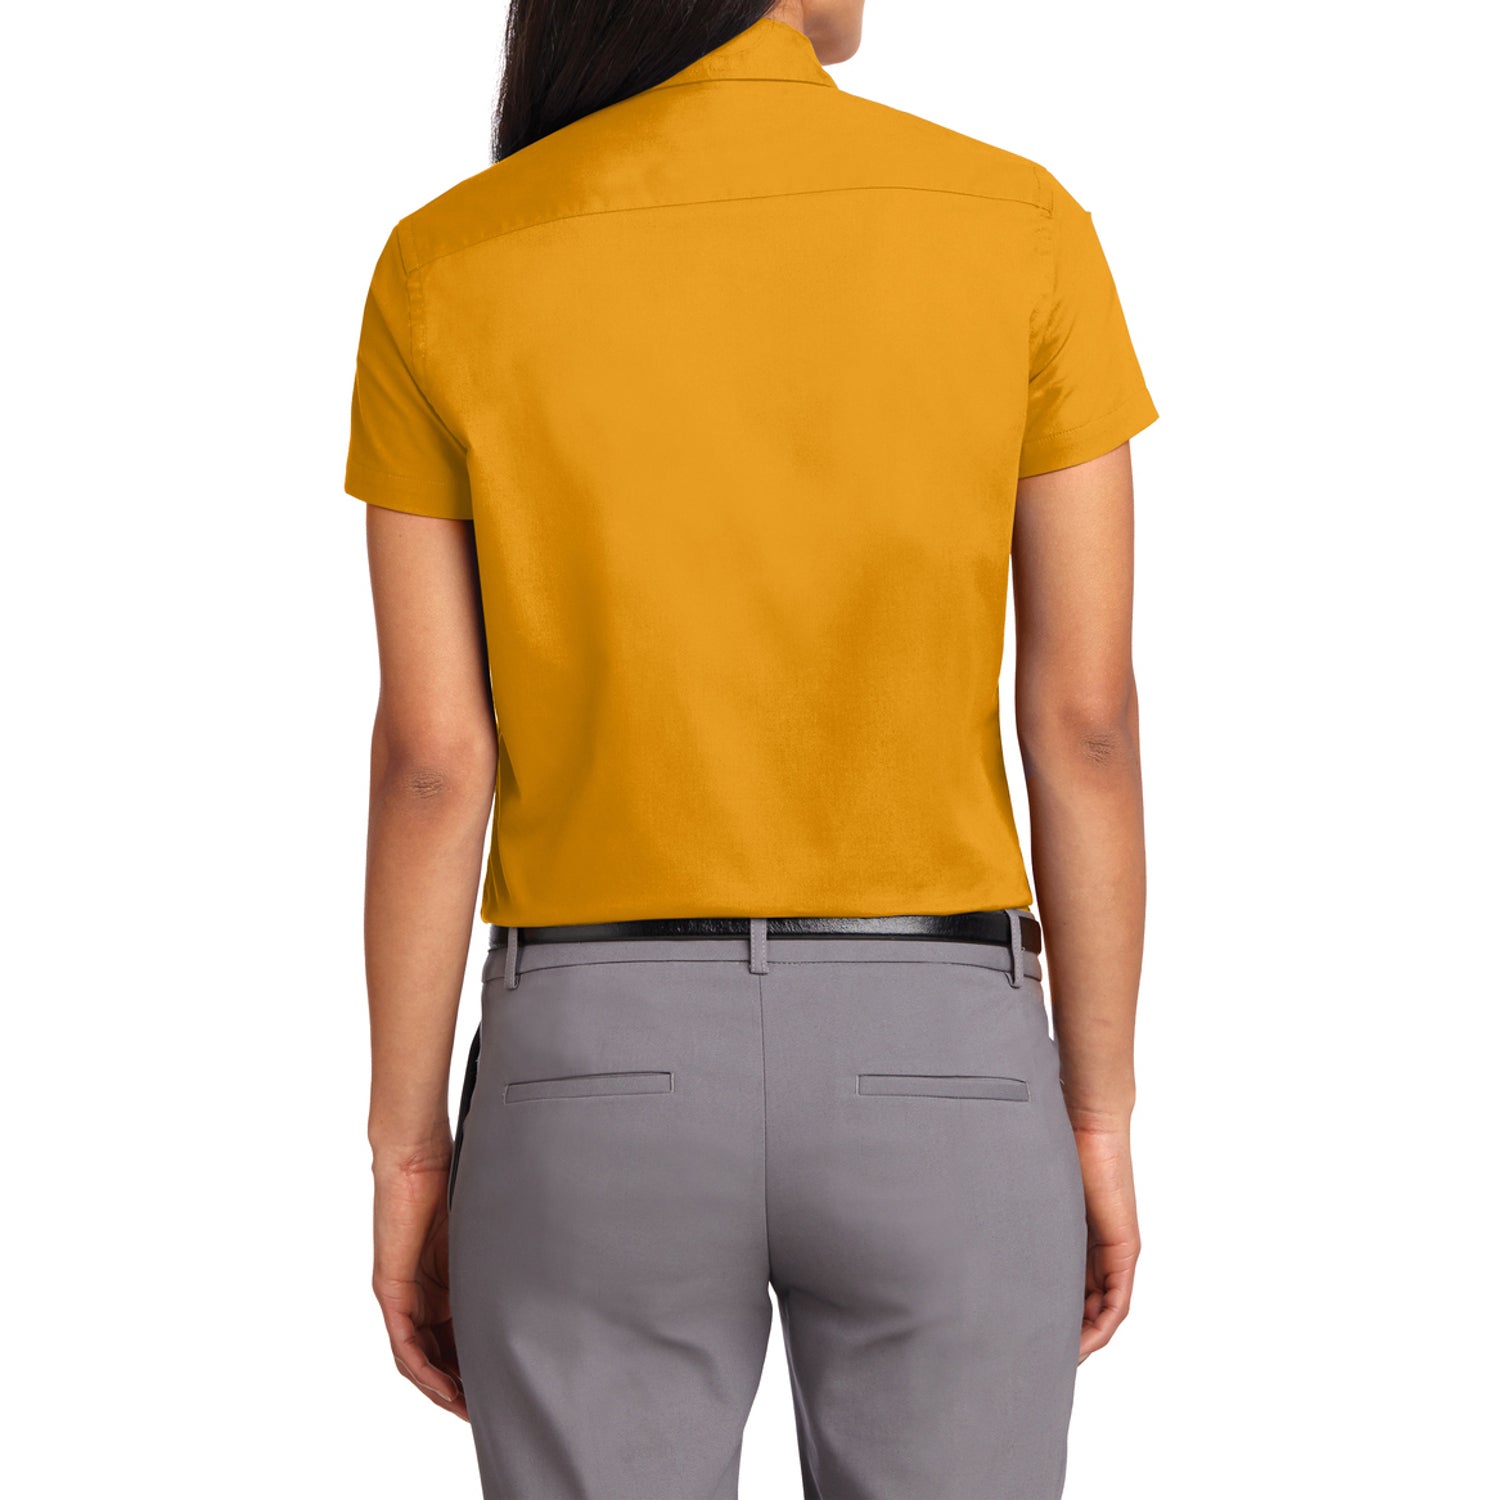 Mafoose Women's Comfortable Short Sleeve Easy Care Shirt Athletic Gold/Light Stone-Back